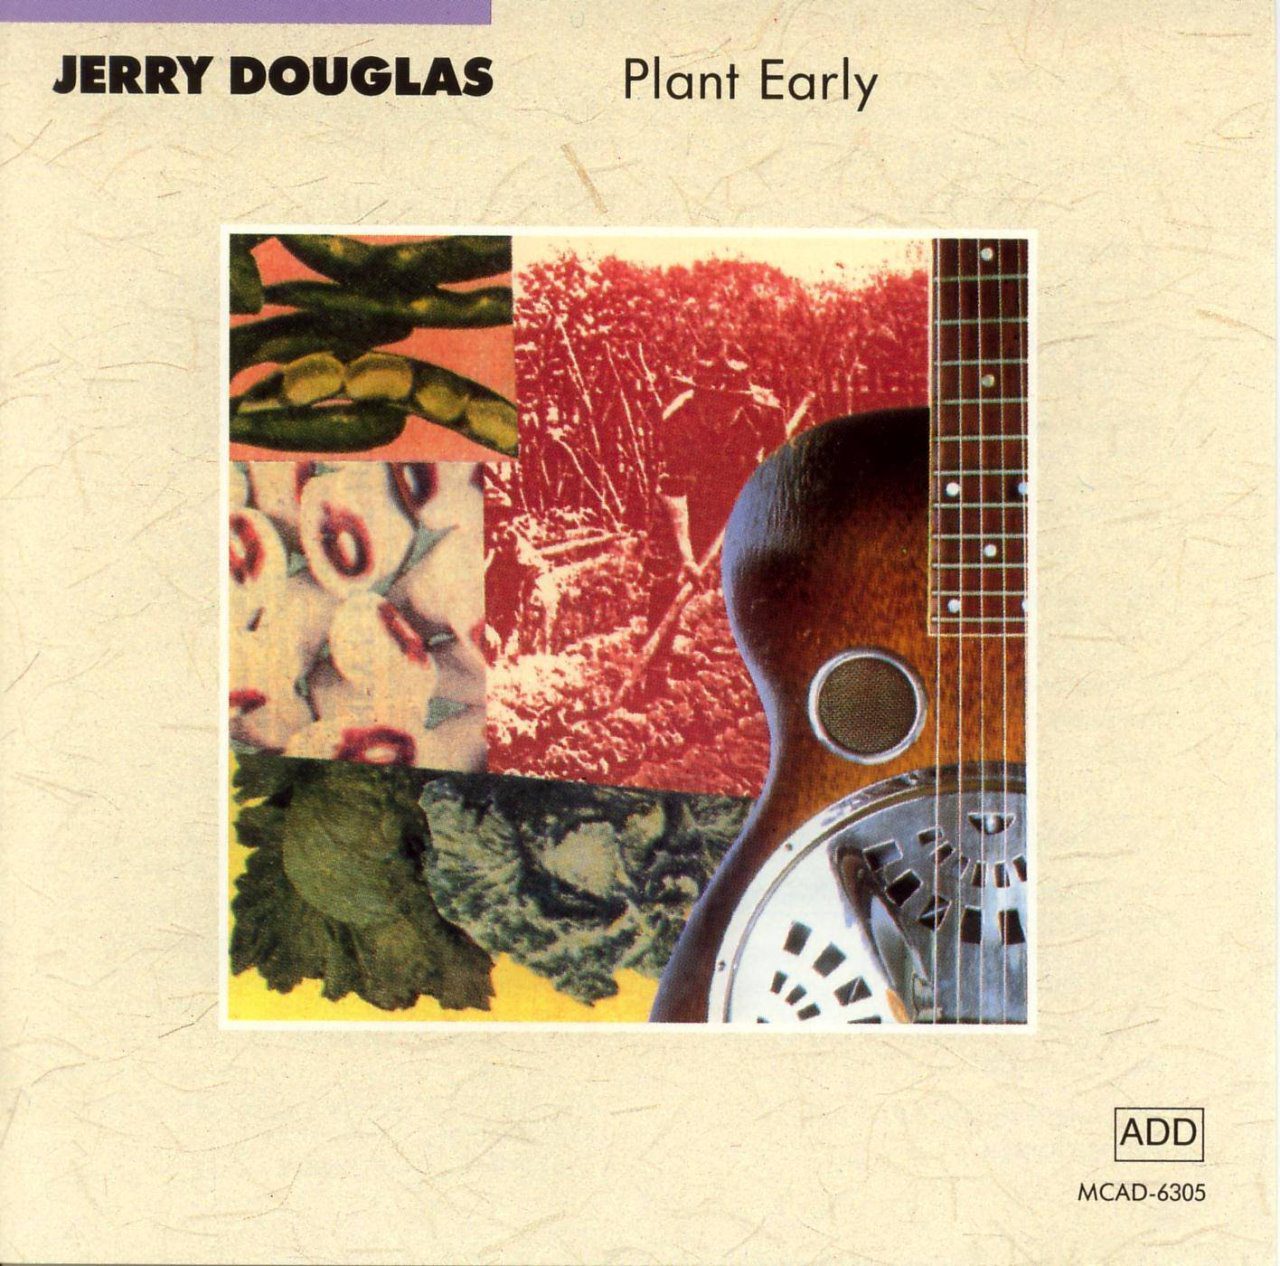 Jerry Douglas – Plant Early cover album